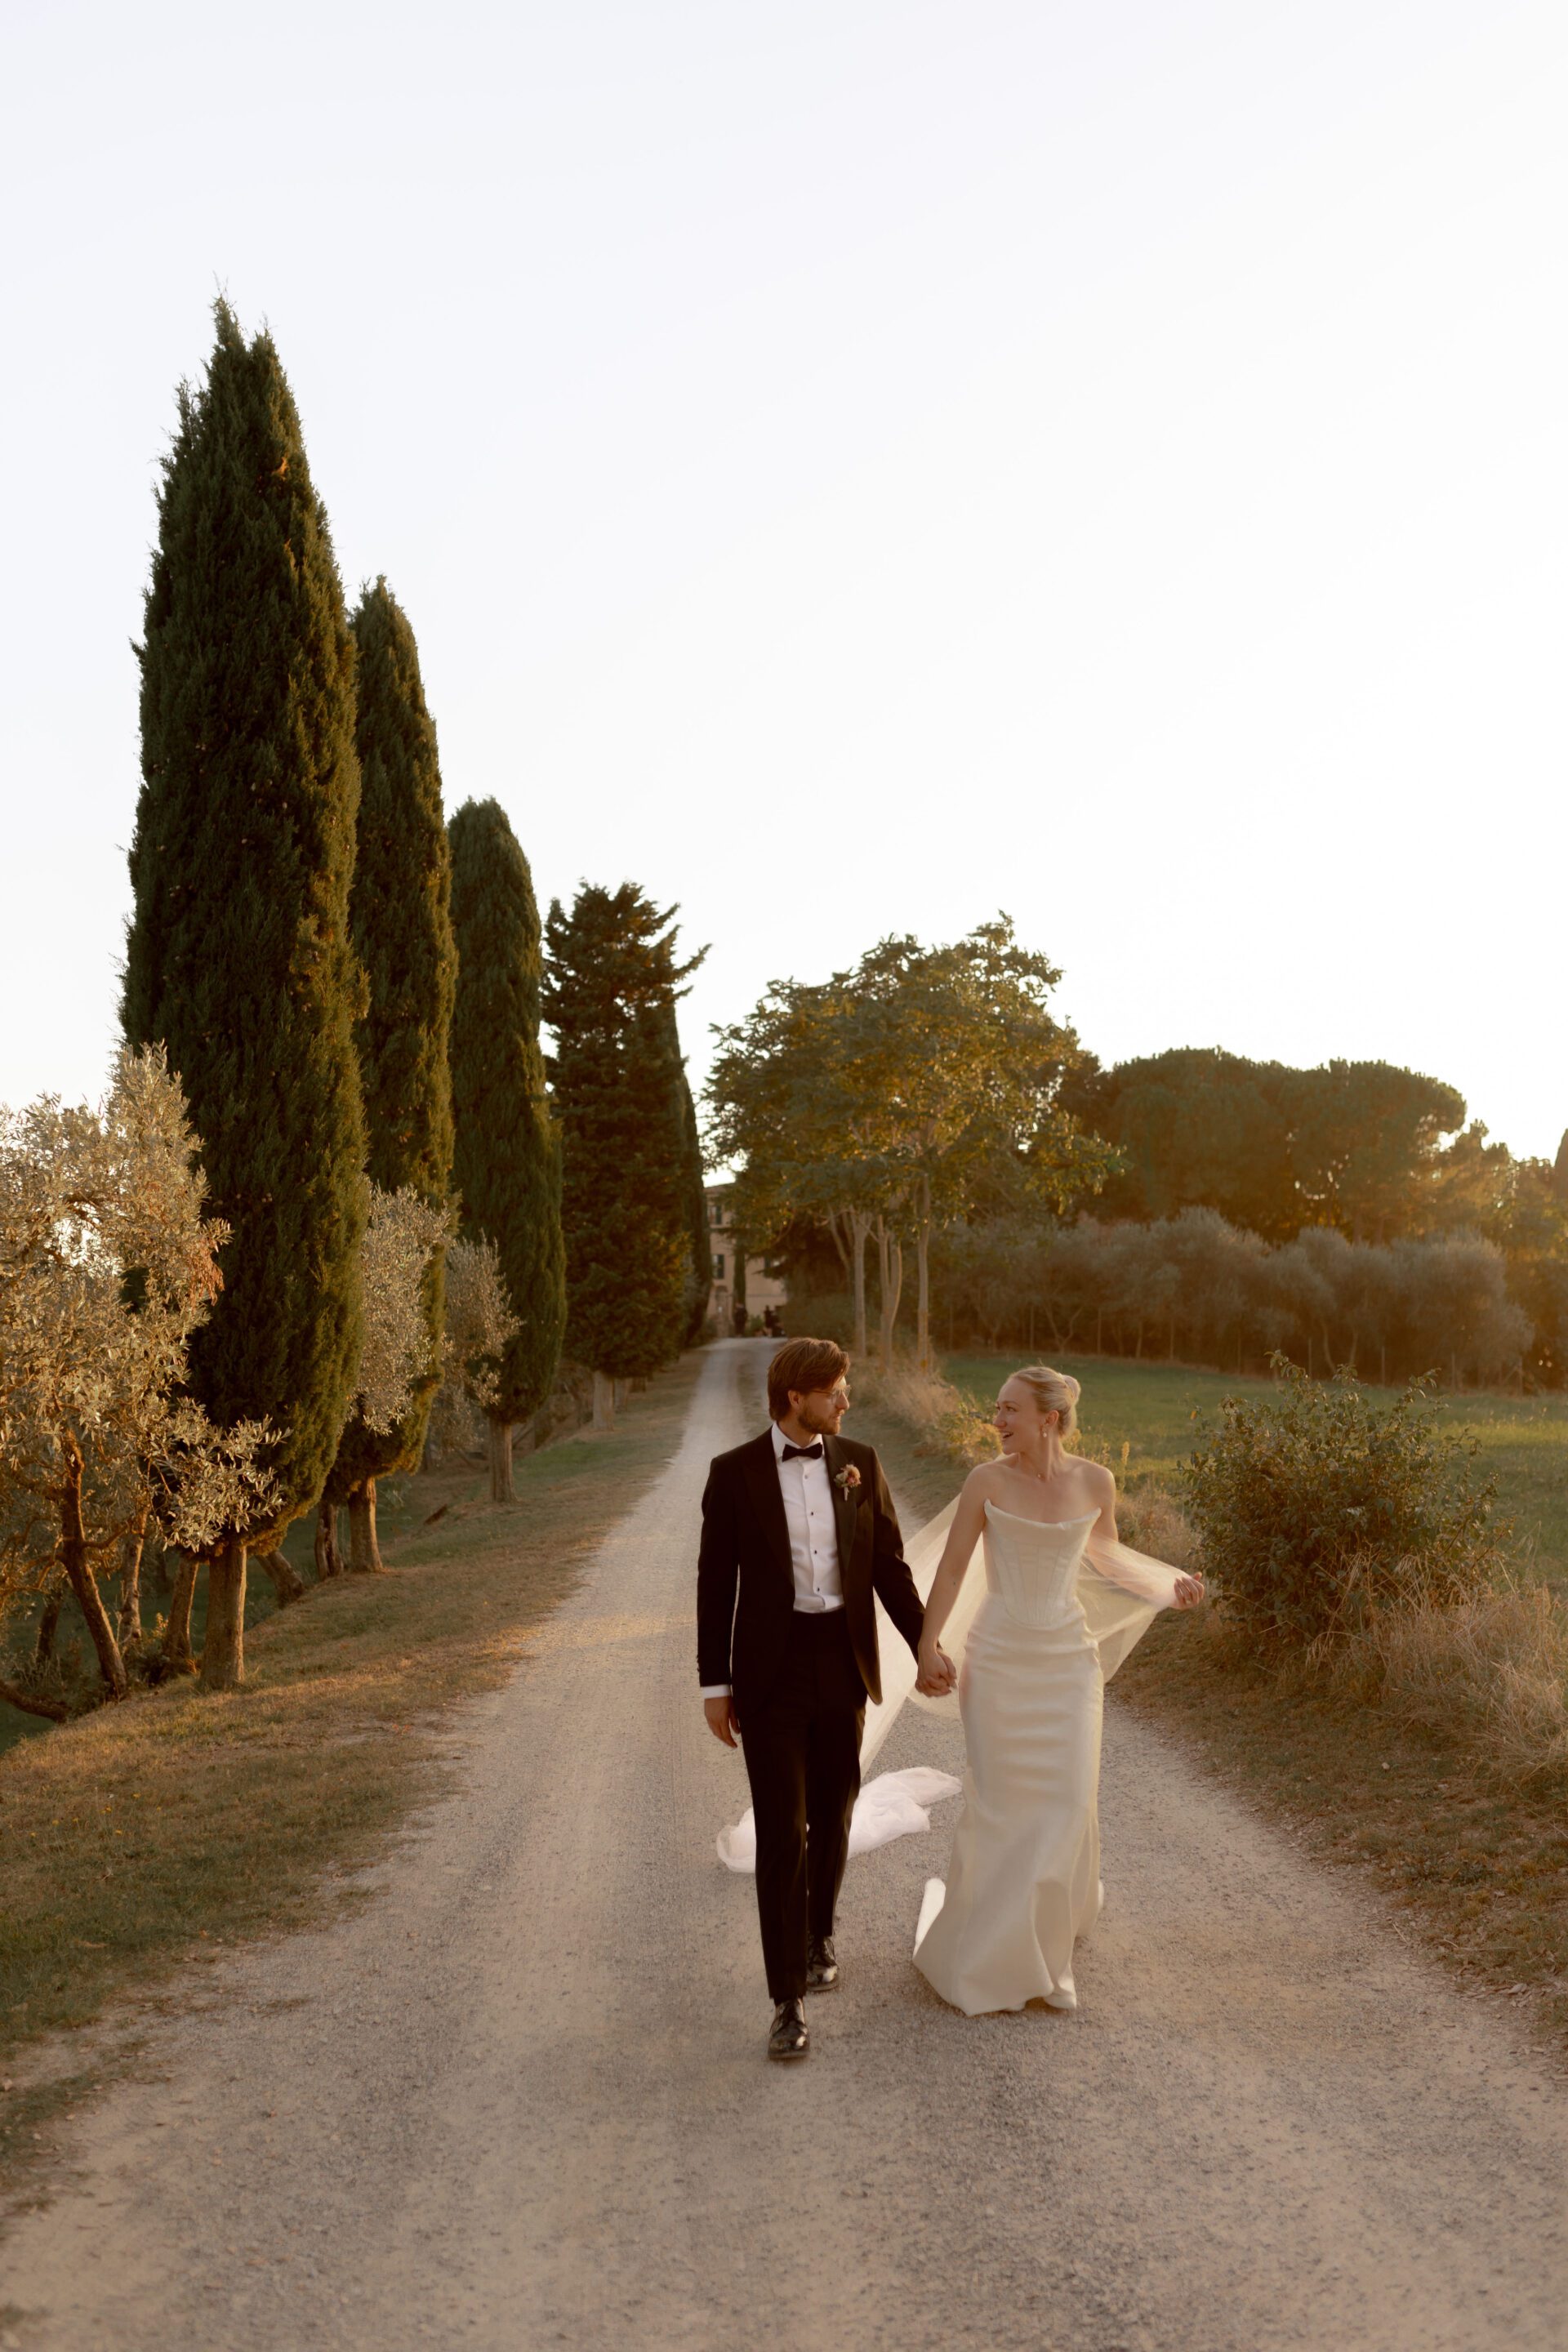 Editorial wedding photography at Italian wedding in Tuscany